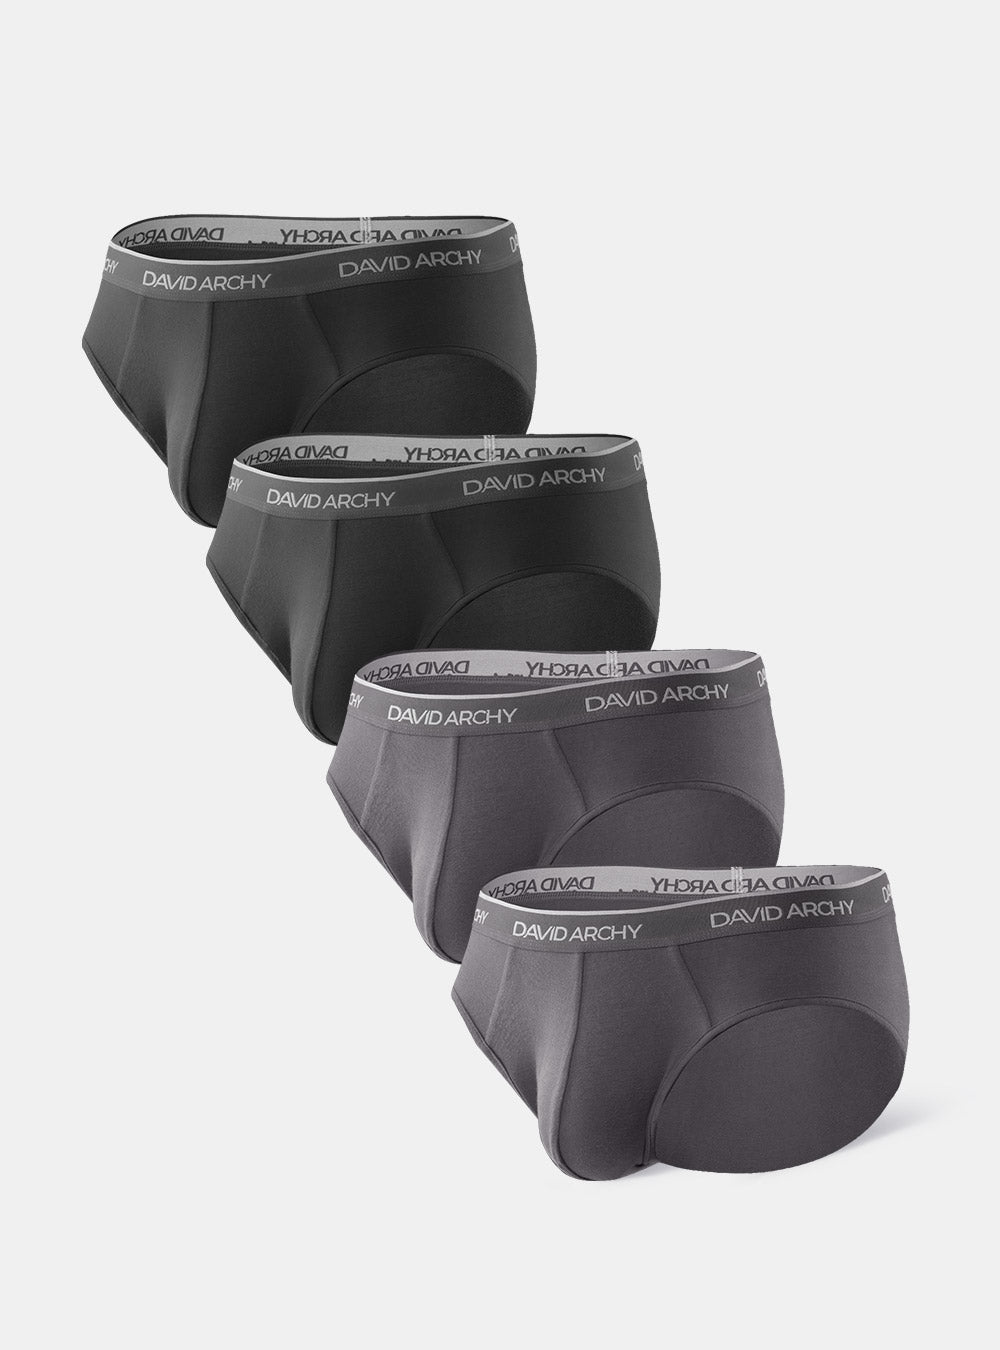 Bamboo Mi – Bamboo Charcoal Underwear » Gadget Flow